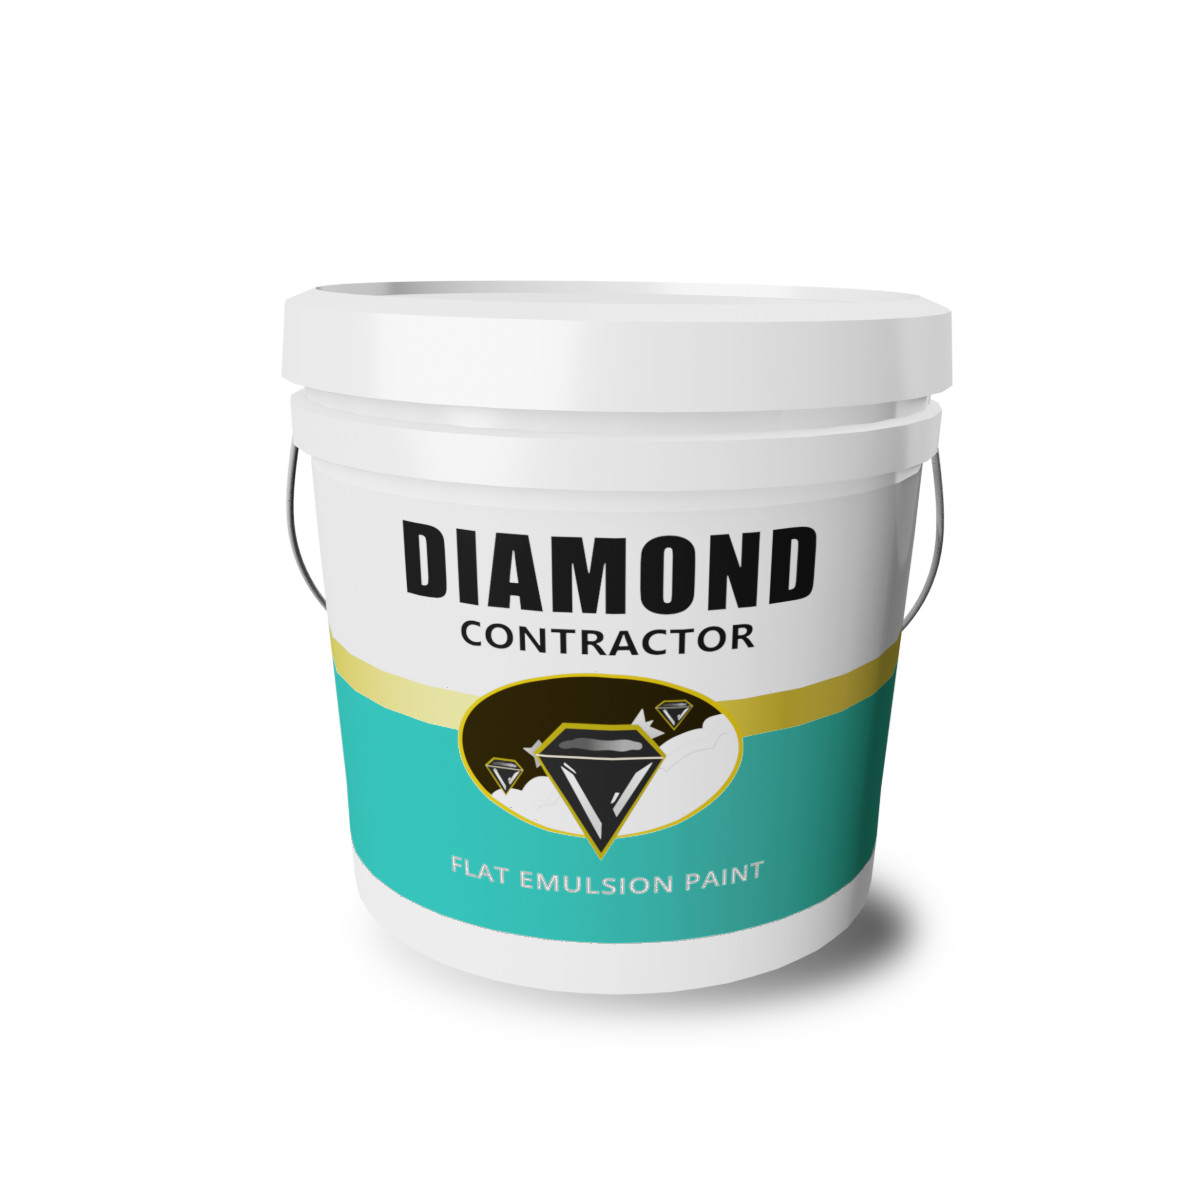 Diamond Contractor Flat Emulsion Paint